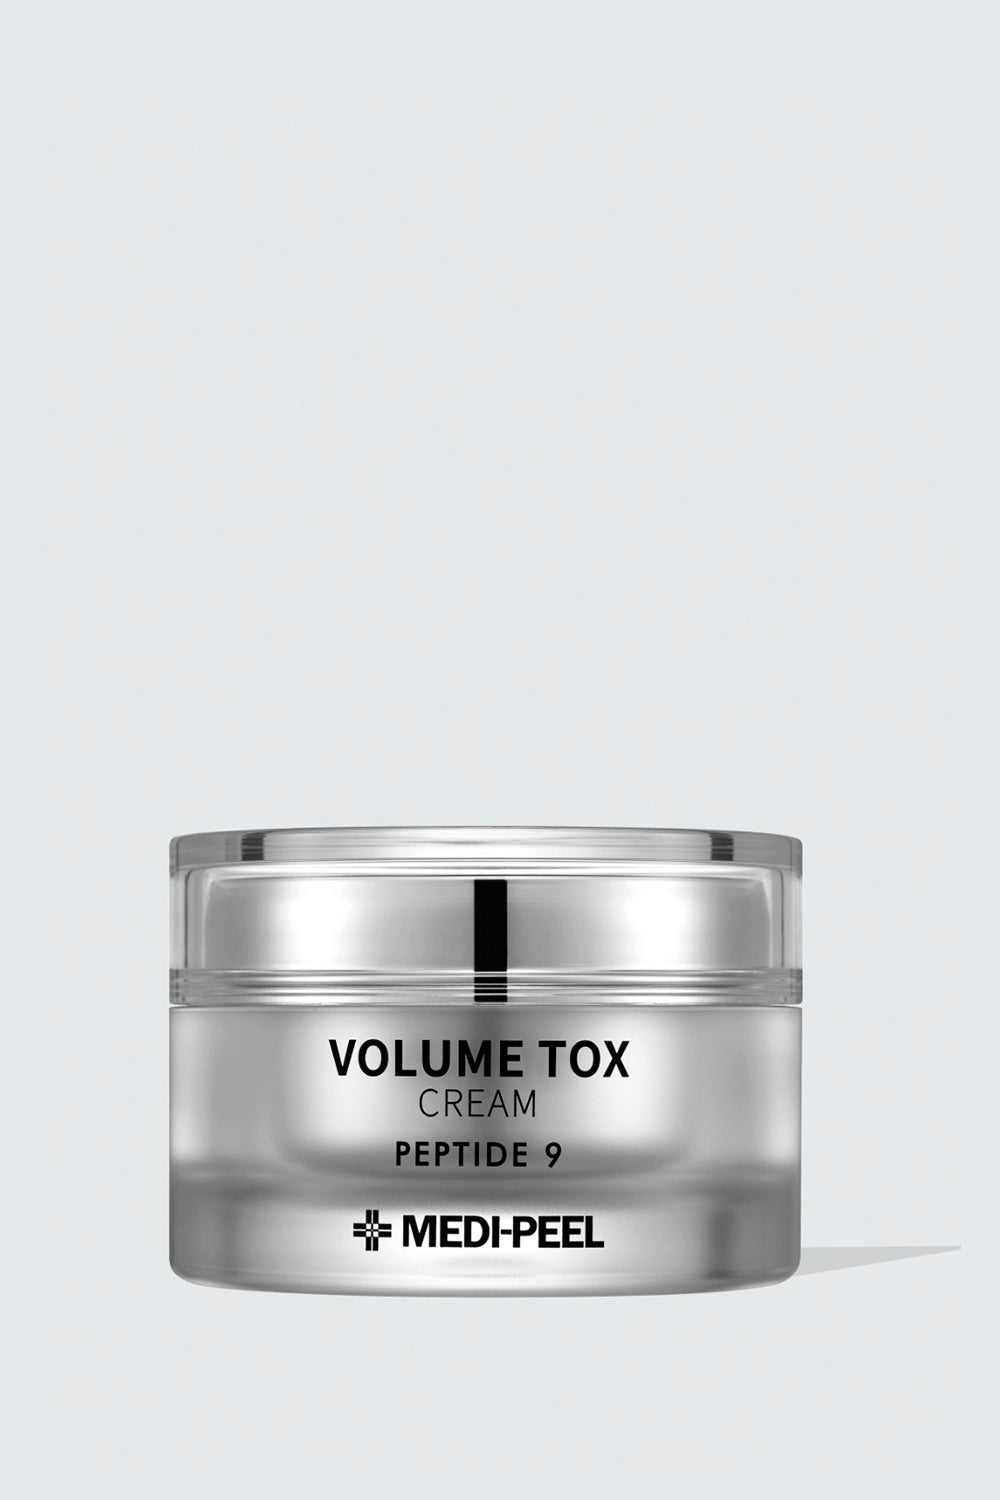 Peptide 9 Volume Tox Cream - 50g MEDI-PEEL